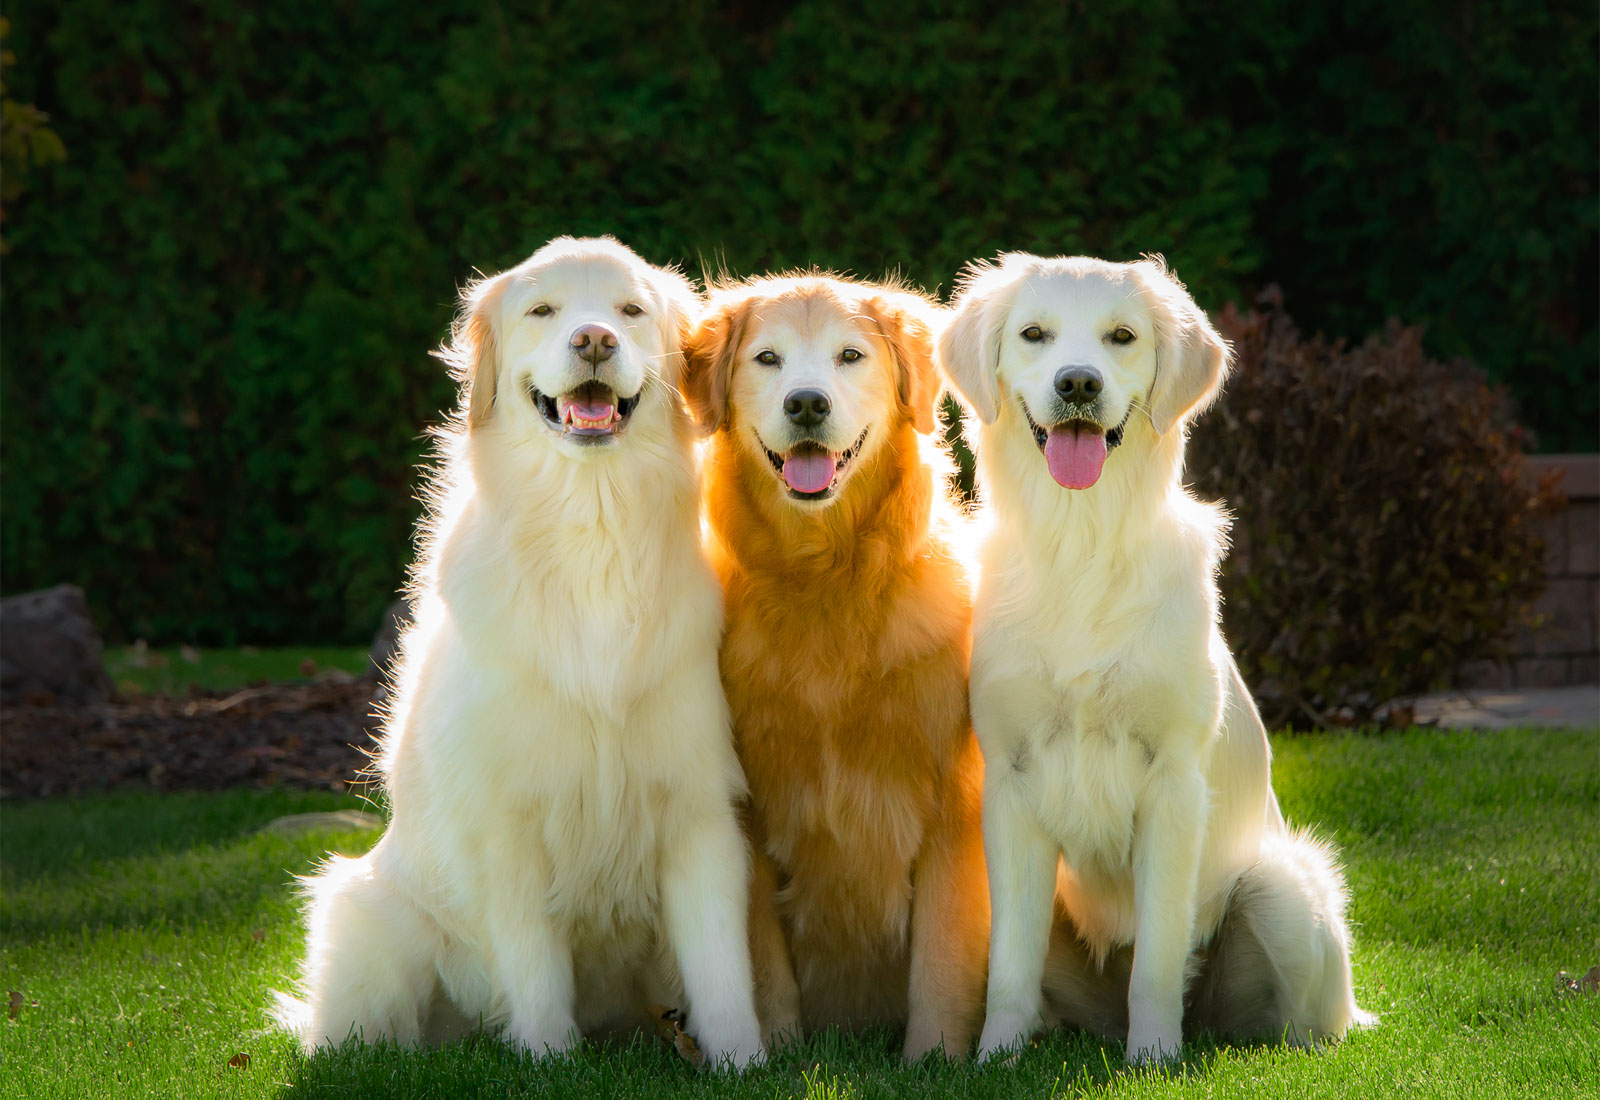 Three Golden Retrievers smiling in the sun